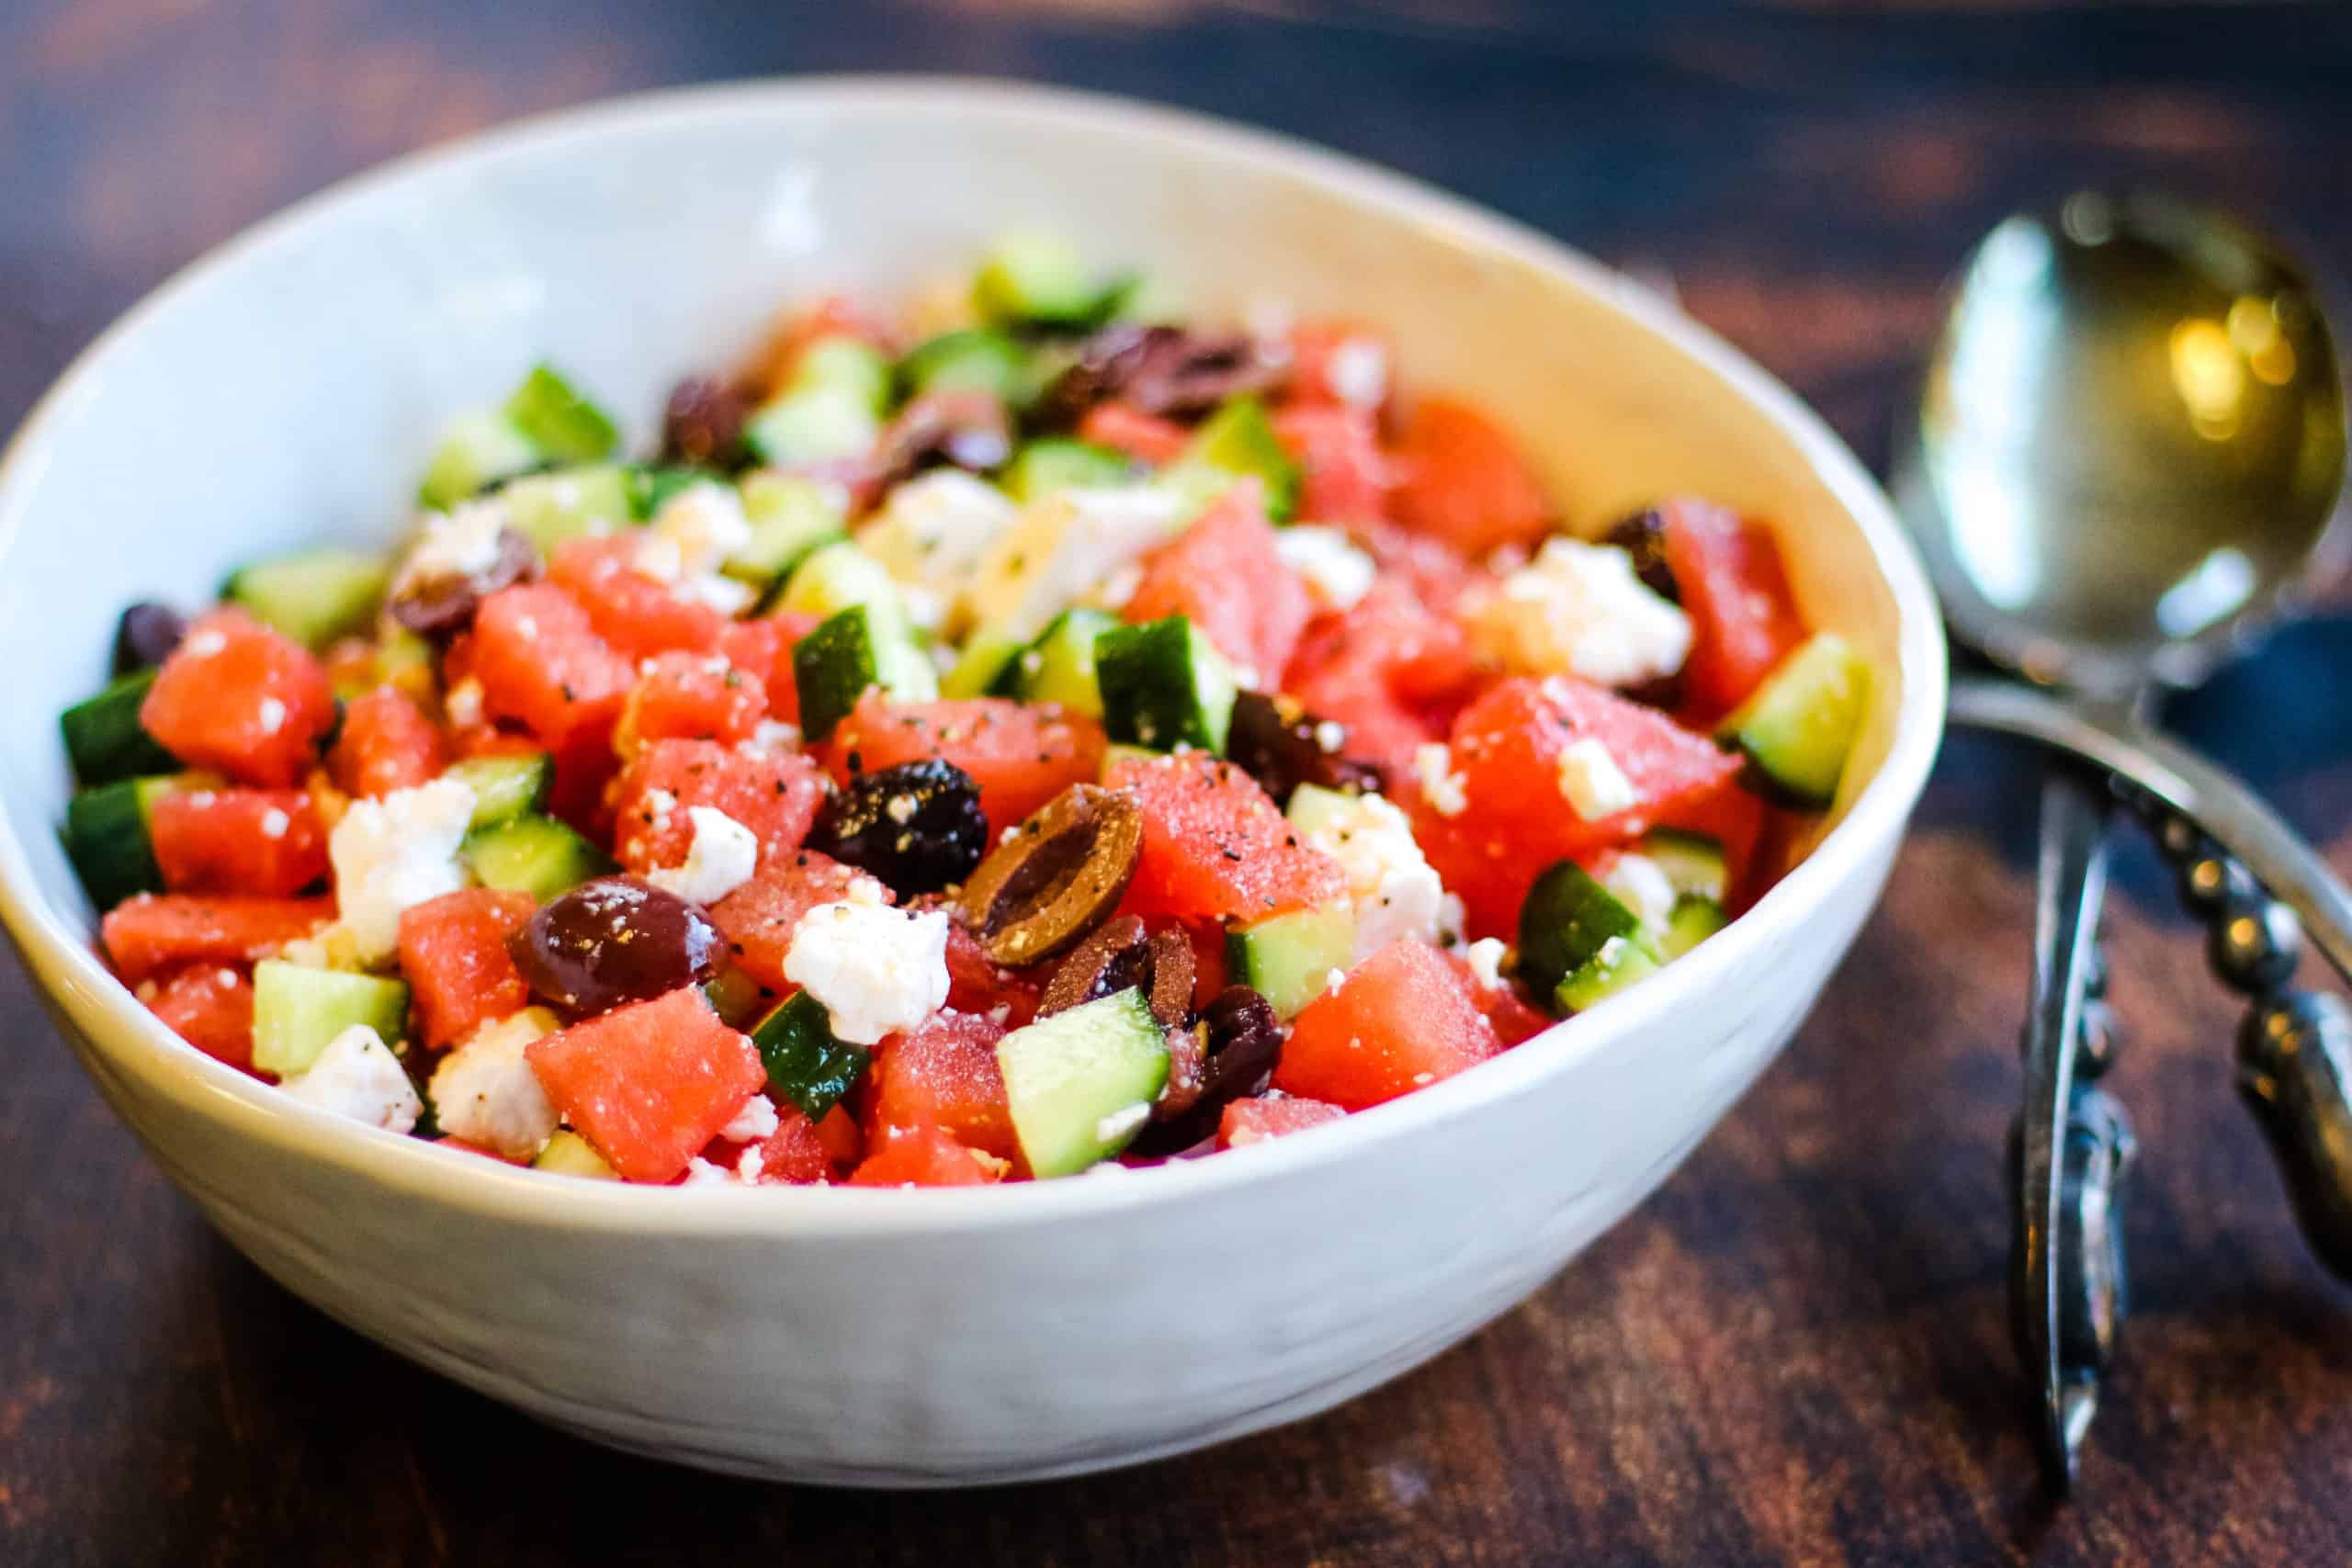 Low angle shot of a bowl of watermelon salad with kalamata olives and feta cheese.